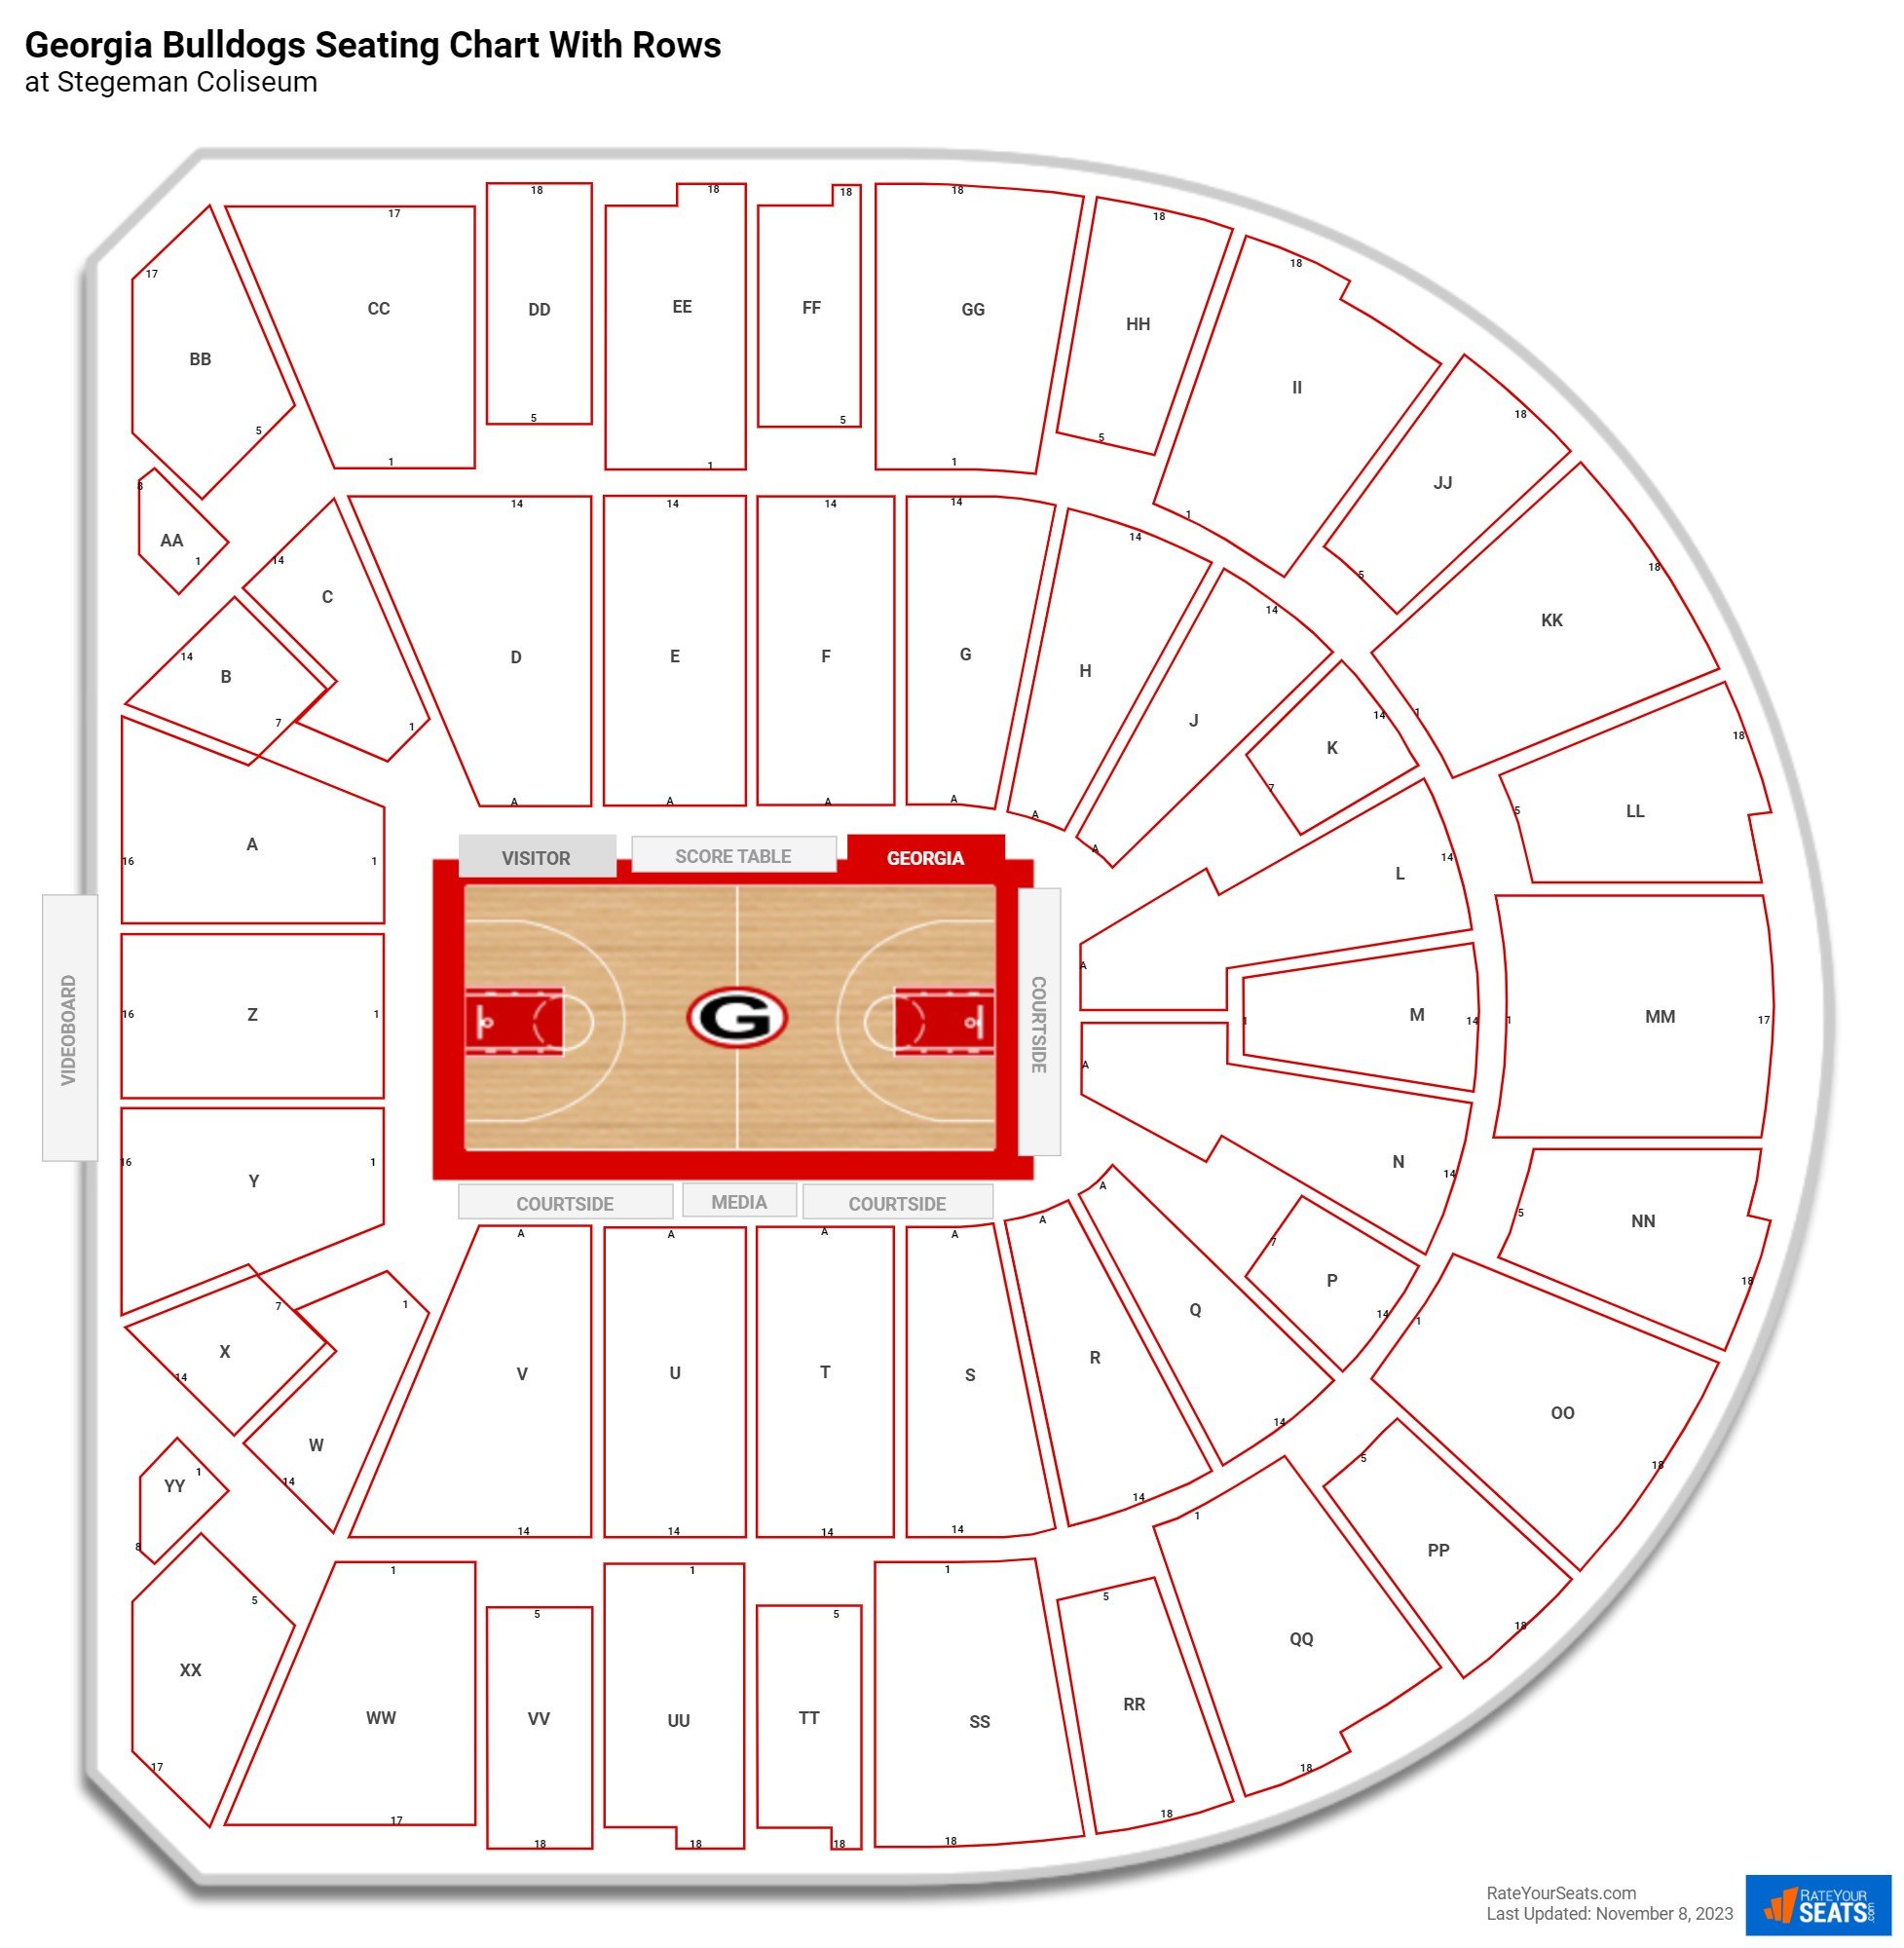 Stegeman Coliseum Seating Chart Map Seatgeek.